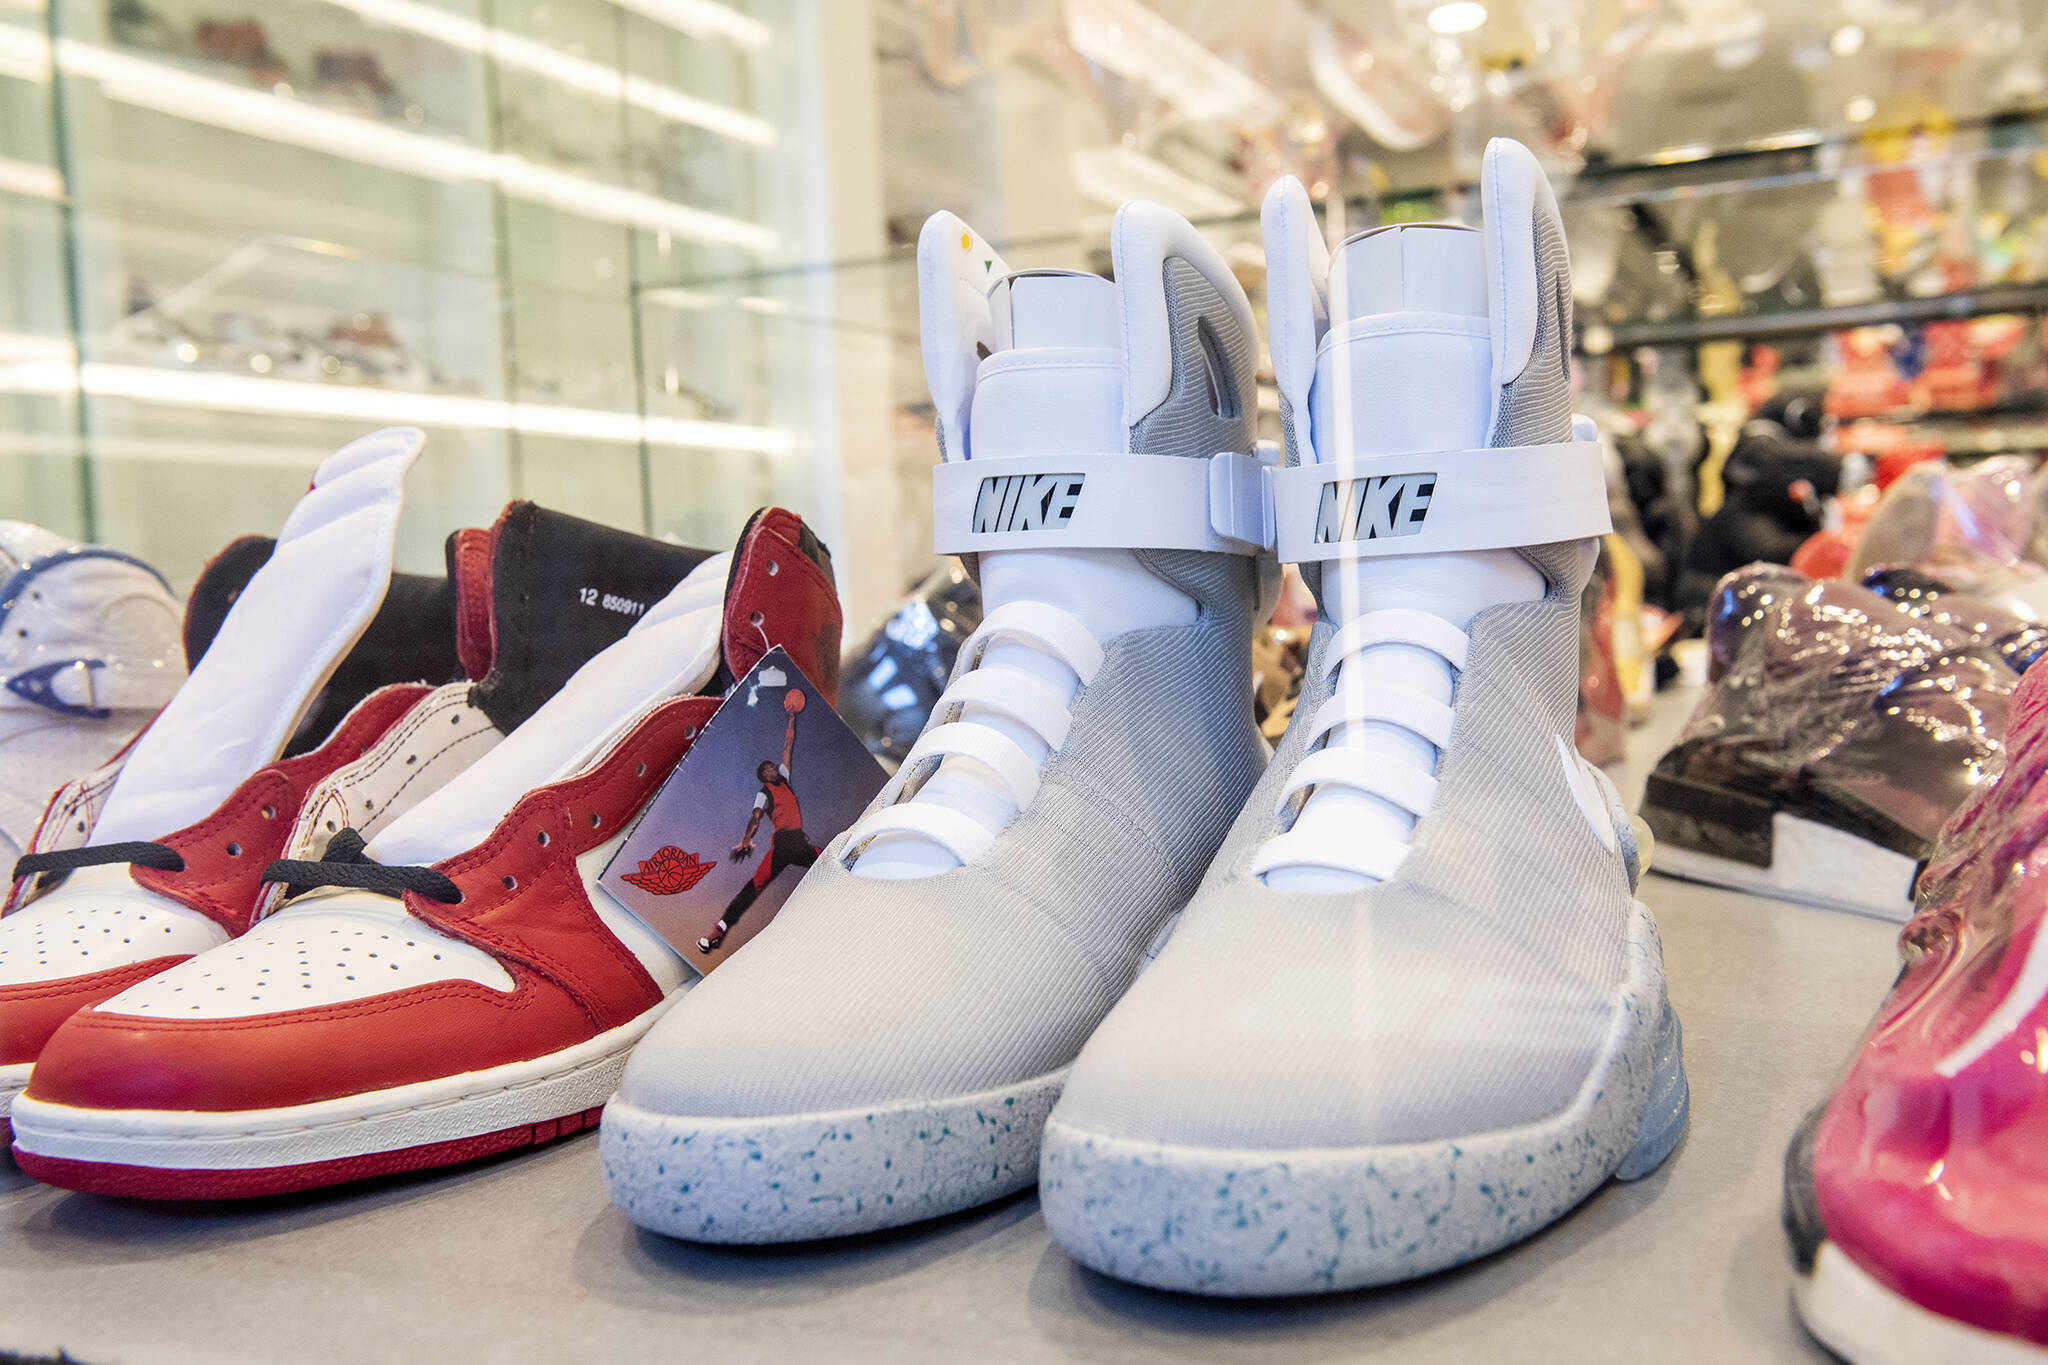 industria Dormido parilla The Best Sneaker Shops in Toronto